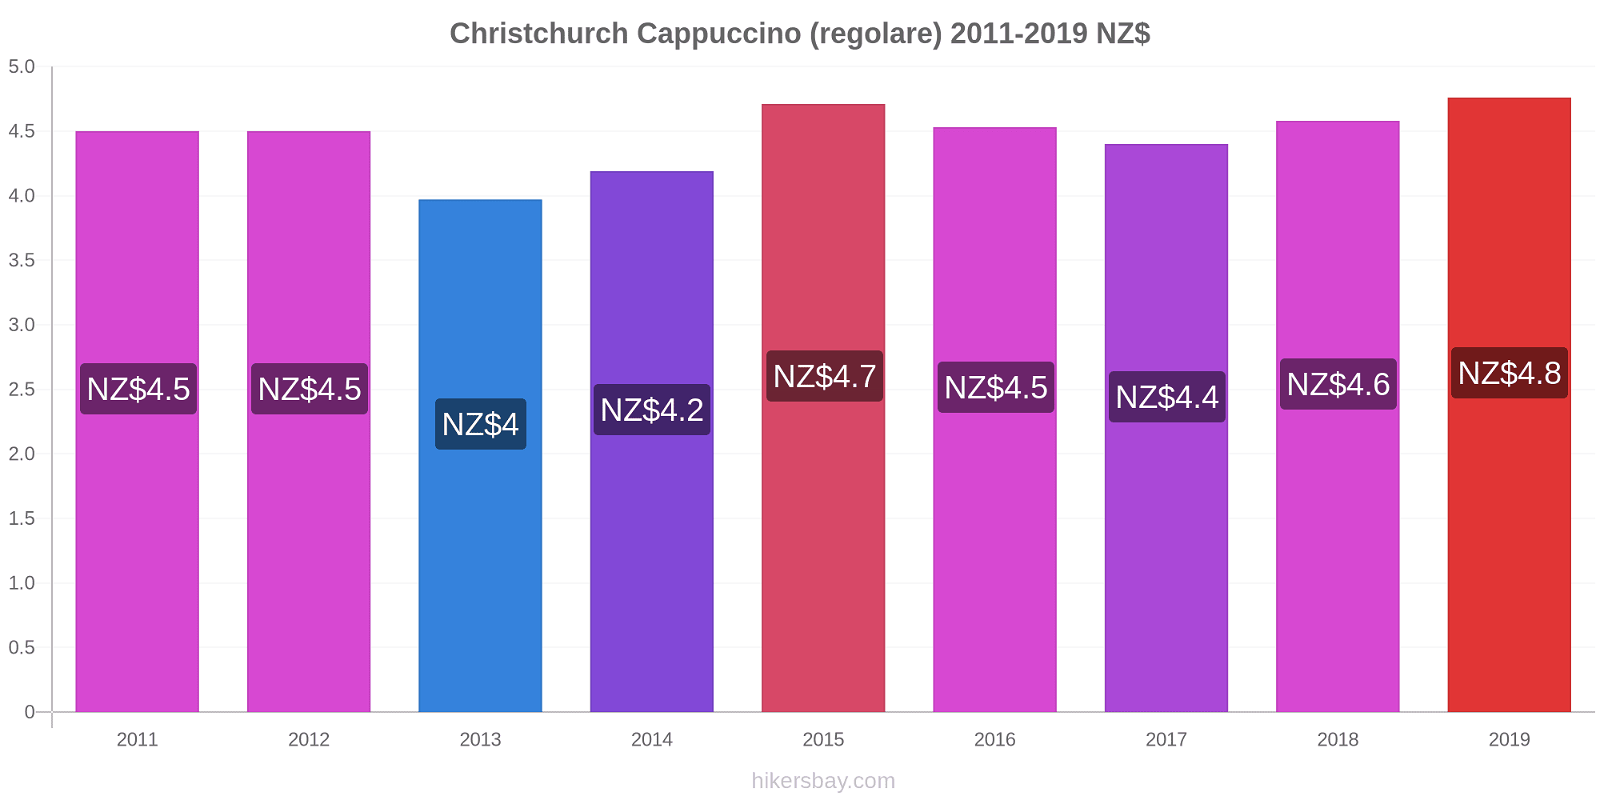 Christchurch variazioni di prezzo Cappuccino (normale) hikersbay.com